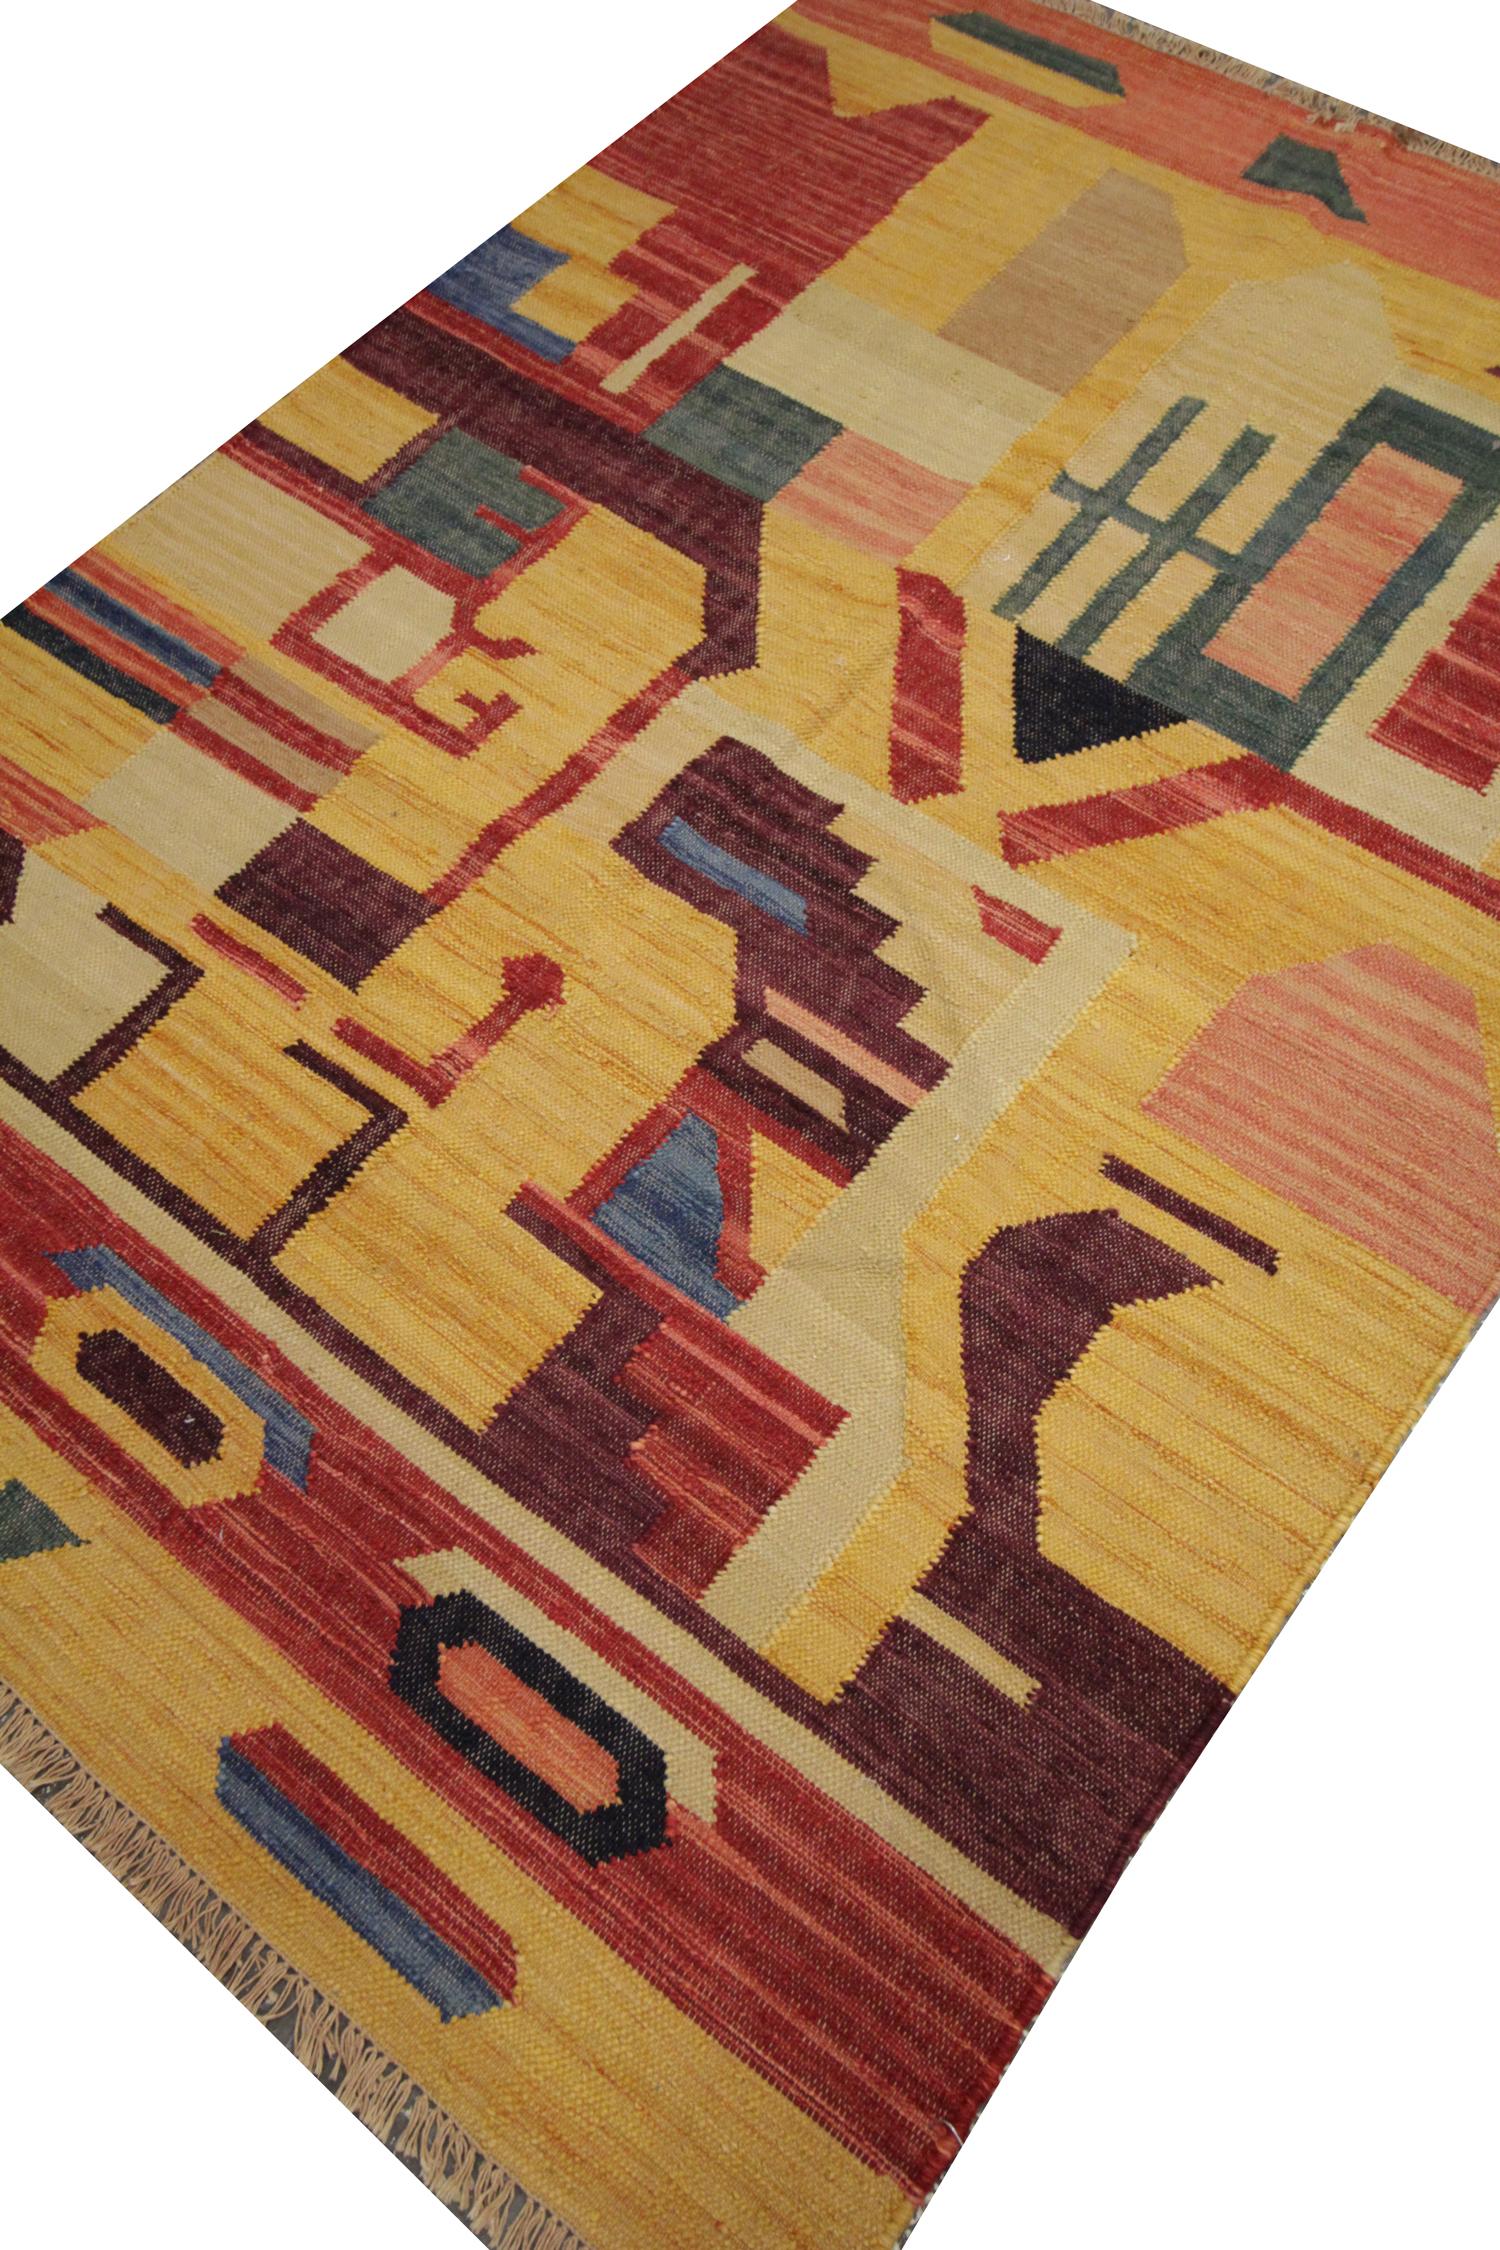 Turkish Abstract Carpet Modern Geometric Kilim Rug Wool Kilim Area Rug 127 x 180cm For Sale